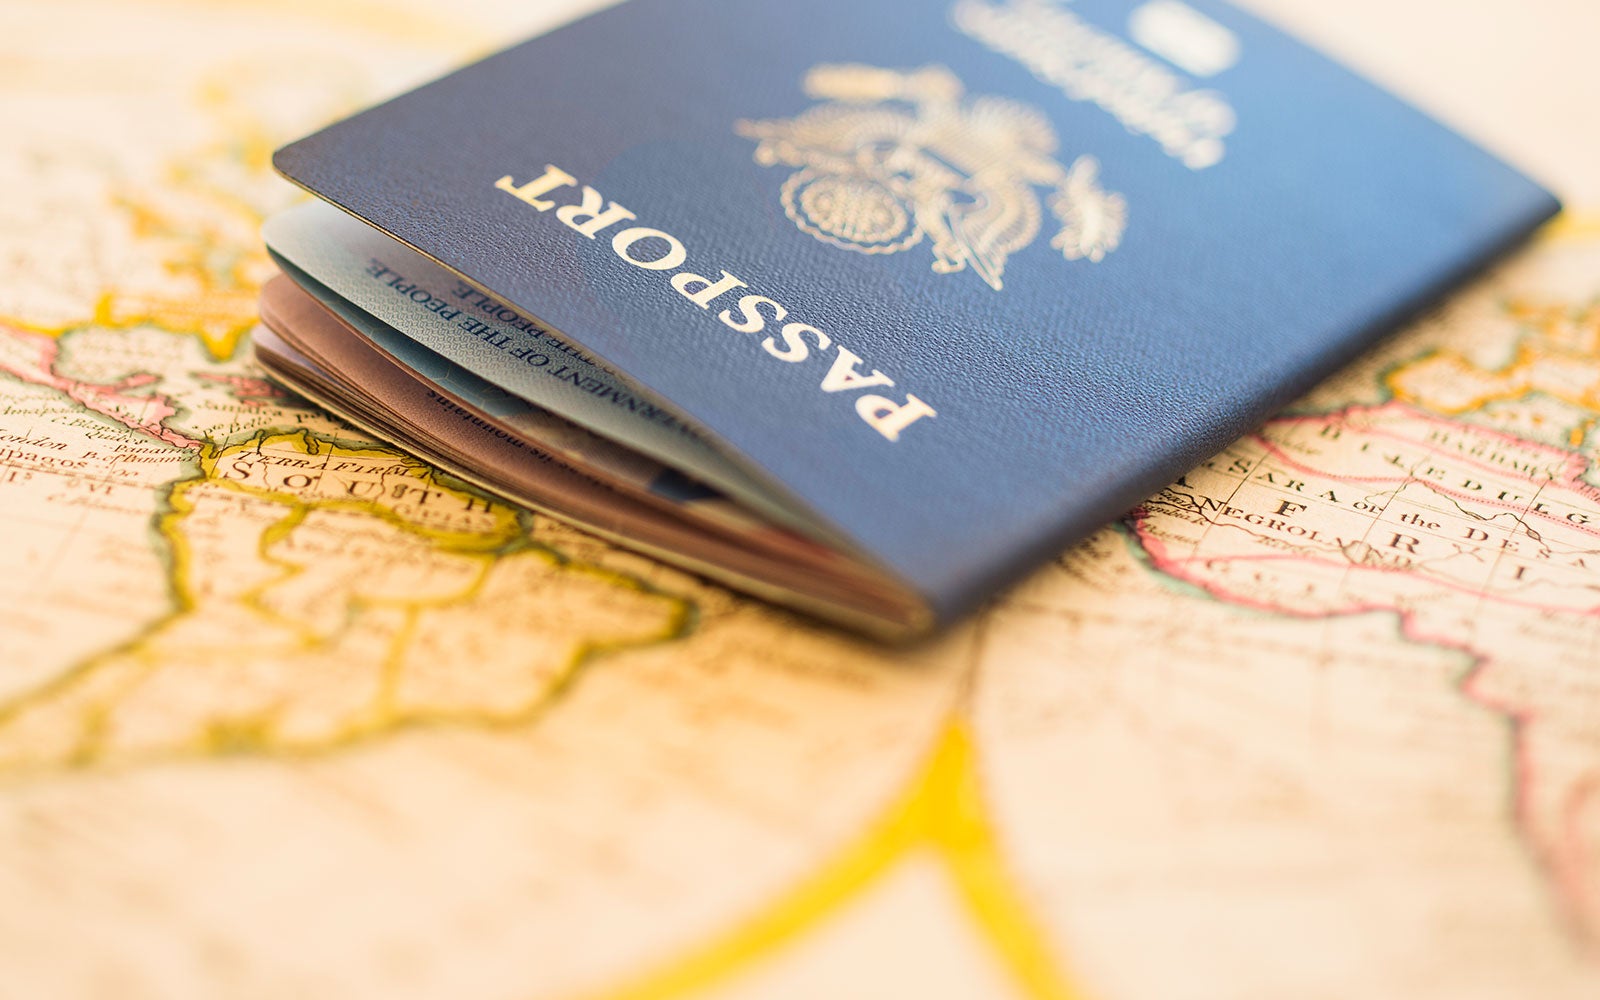 Passport on map background image.